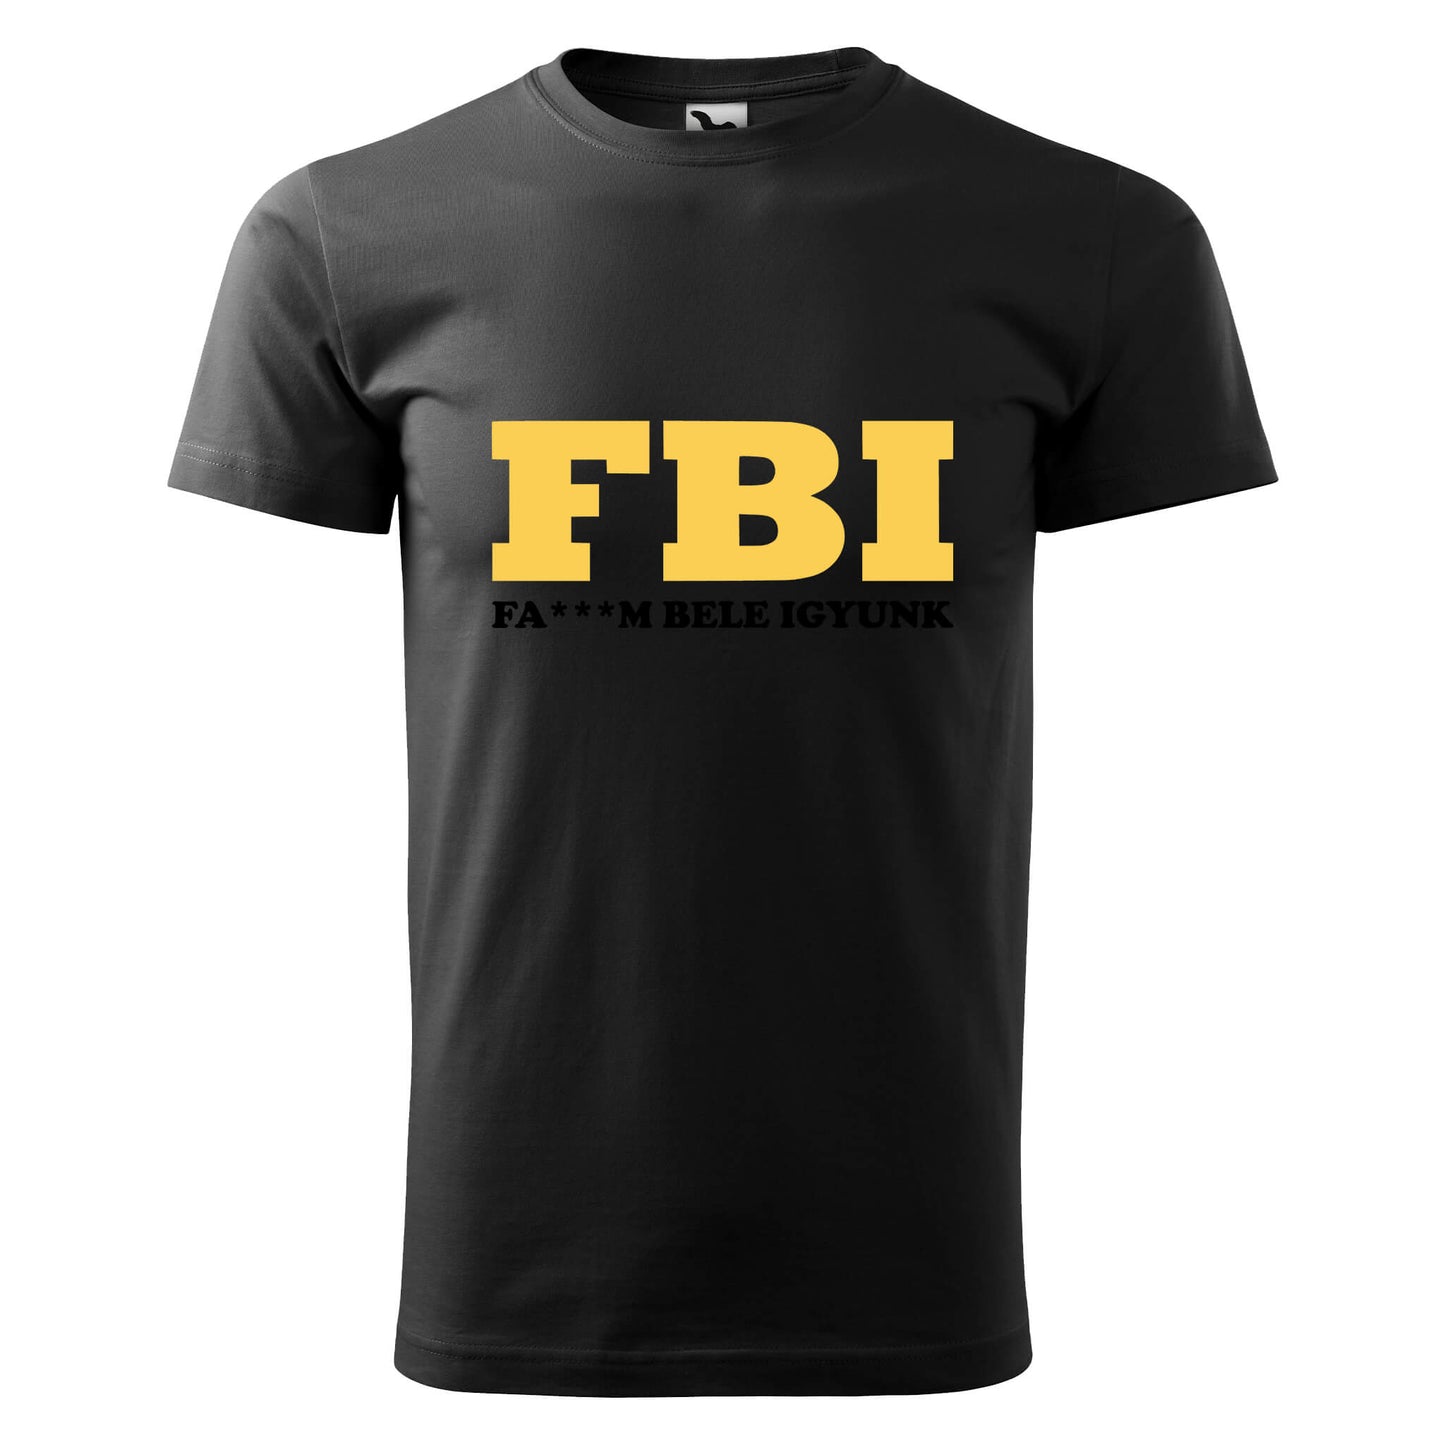 Faszom bele igyunk fbi t-shirt - rvdesignprint